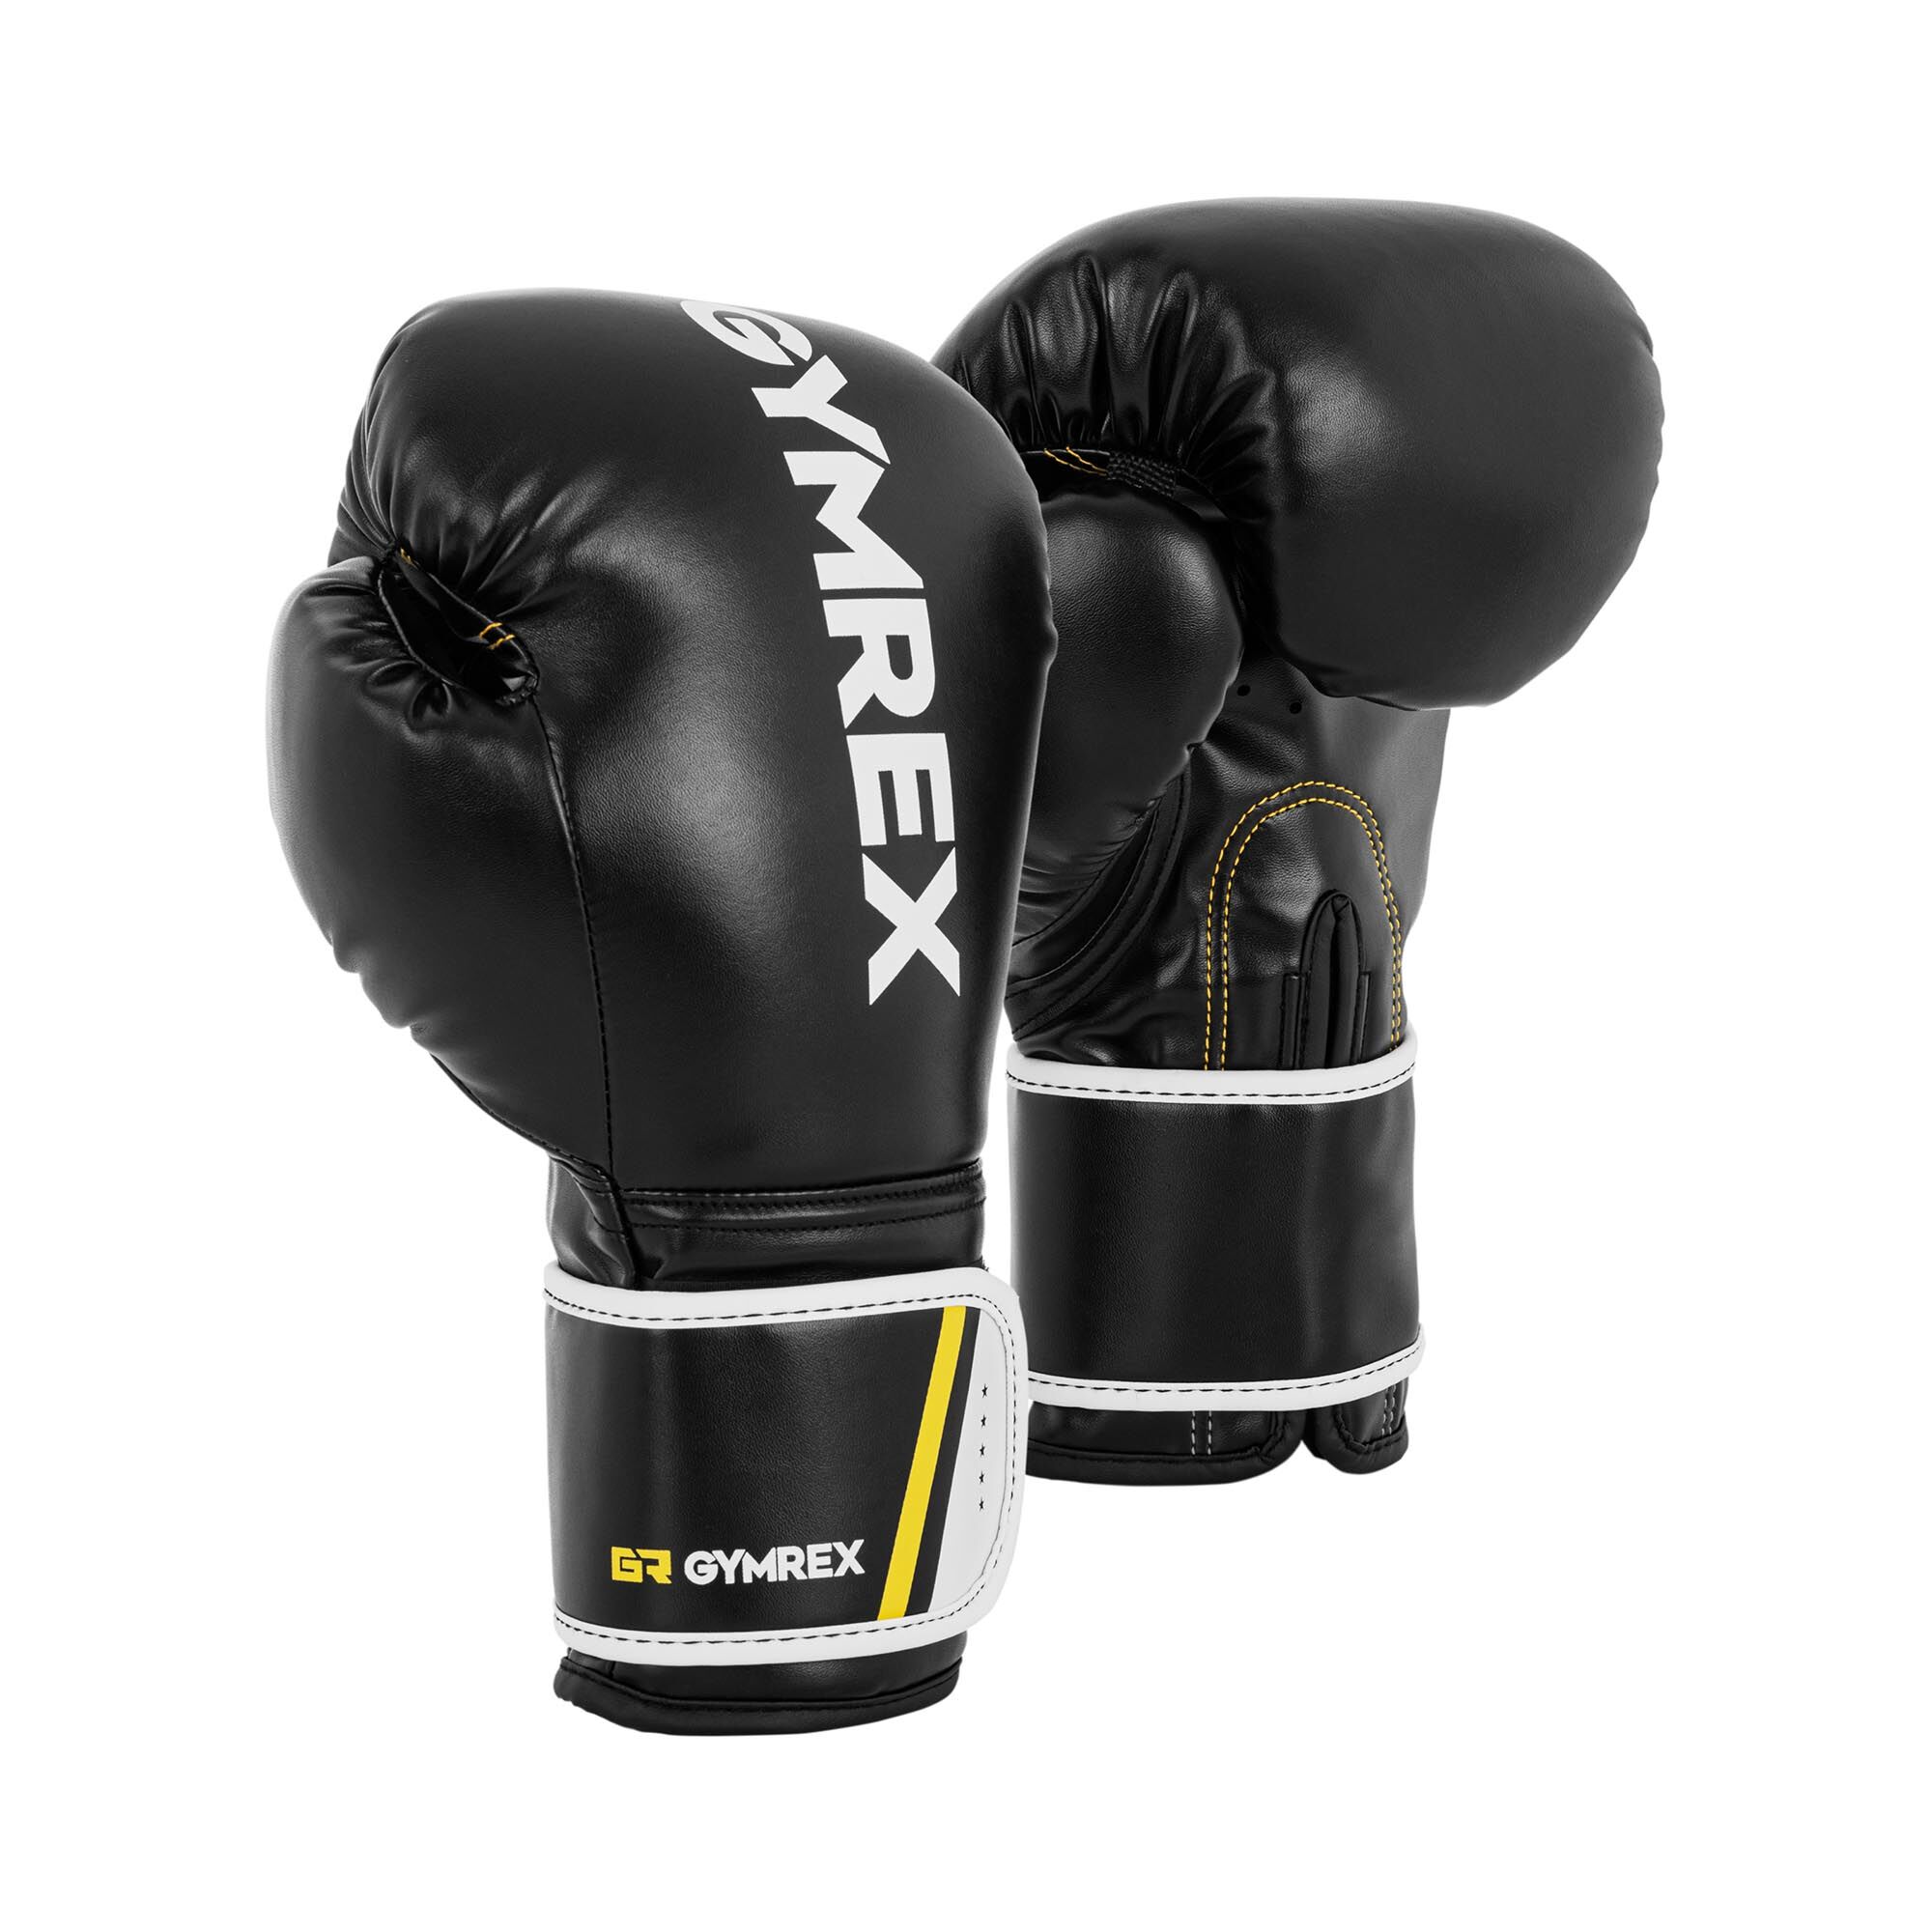 Gymrex Boxing Gloves - 12 oz - black